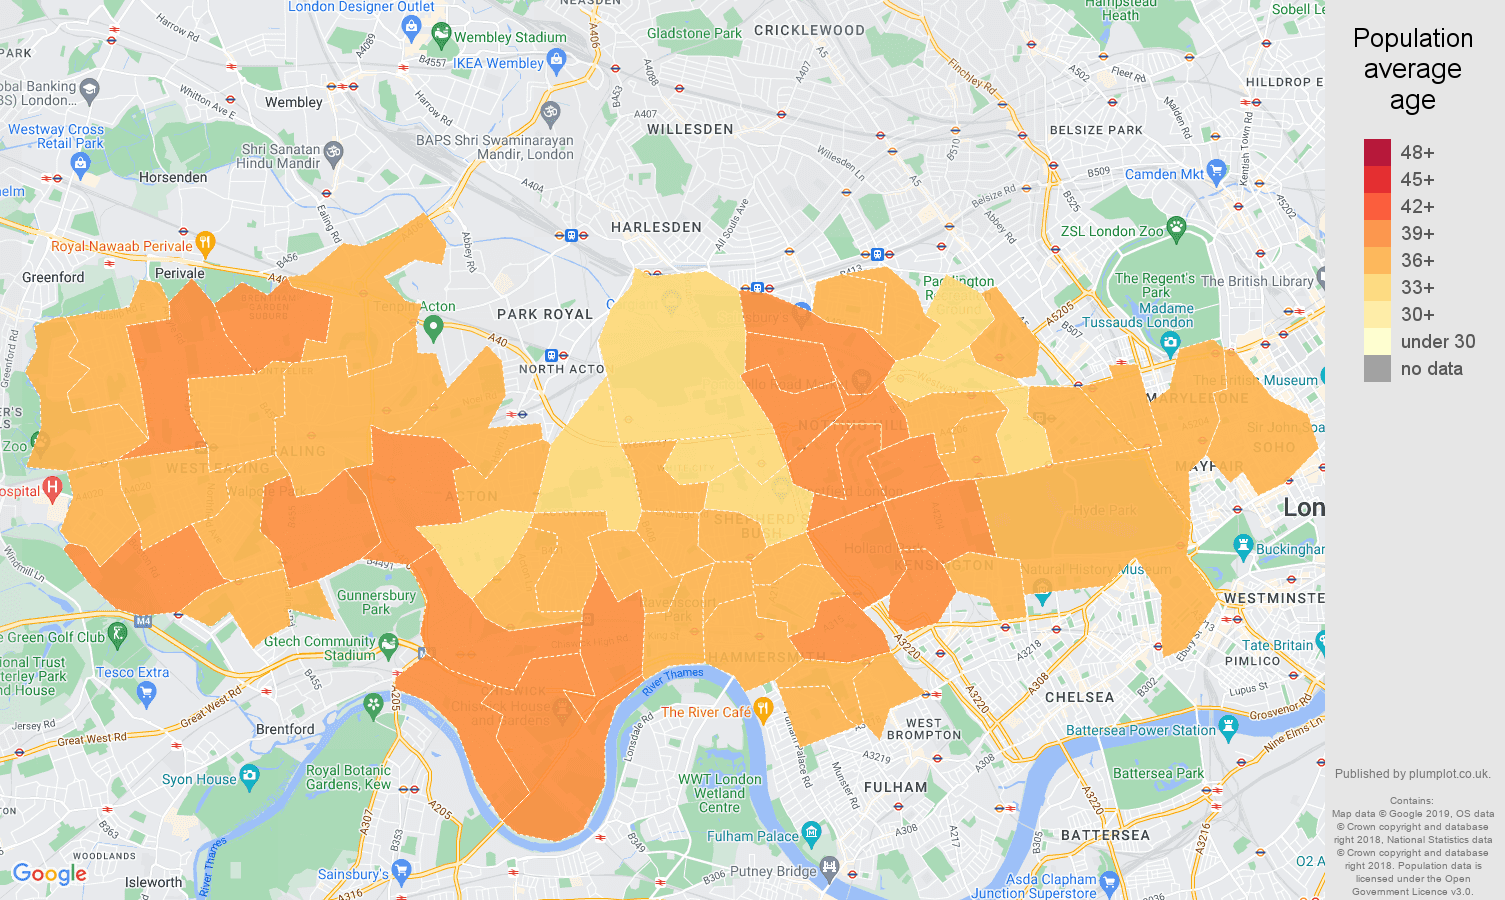 West London population average age map